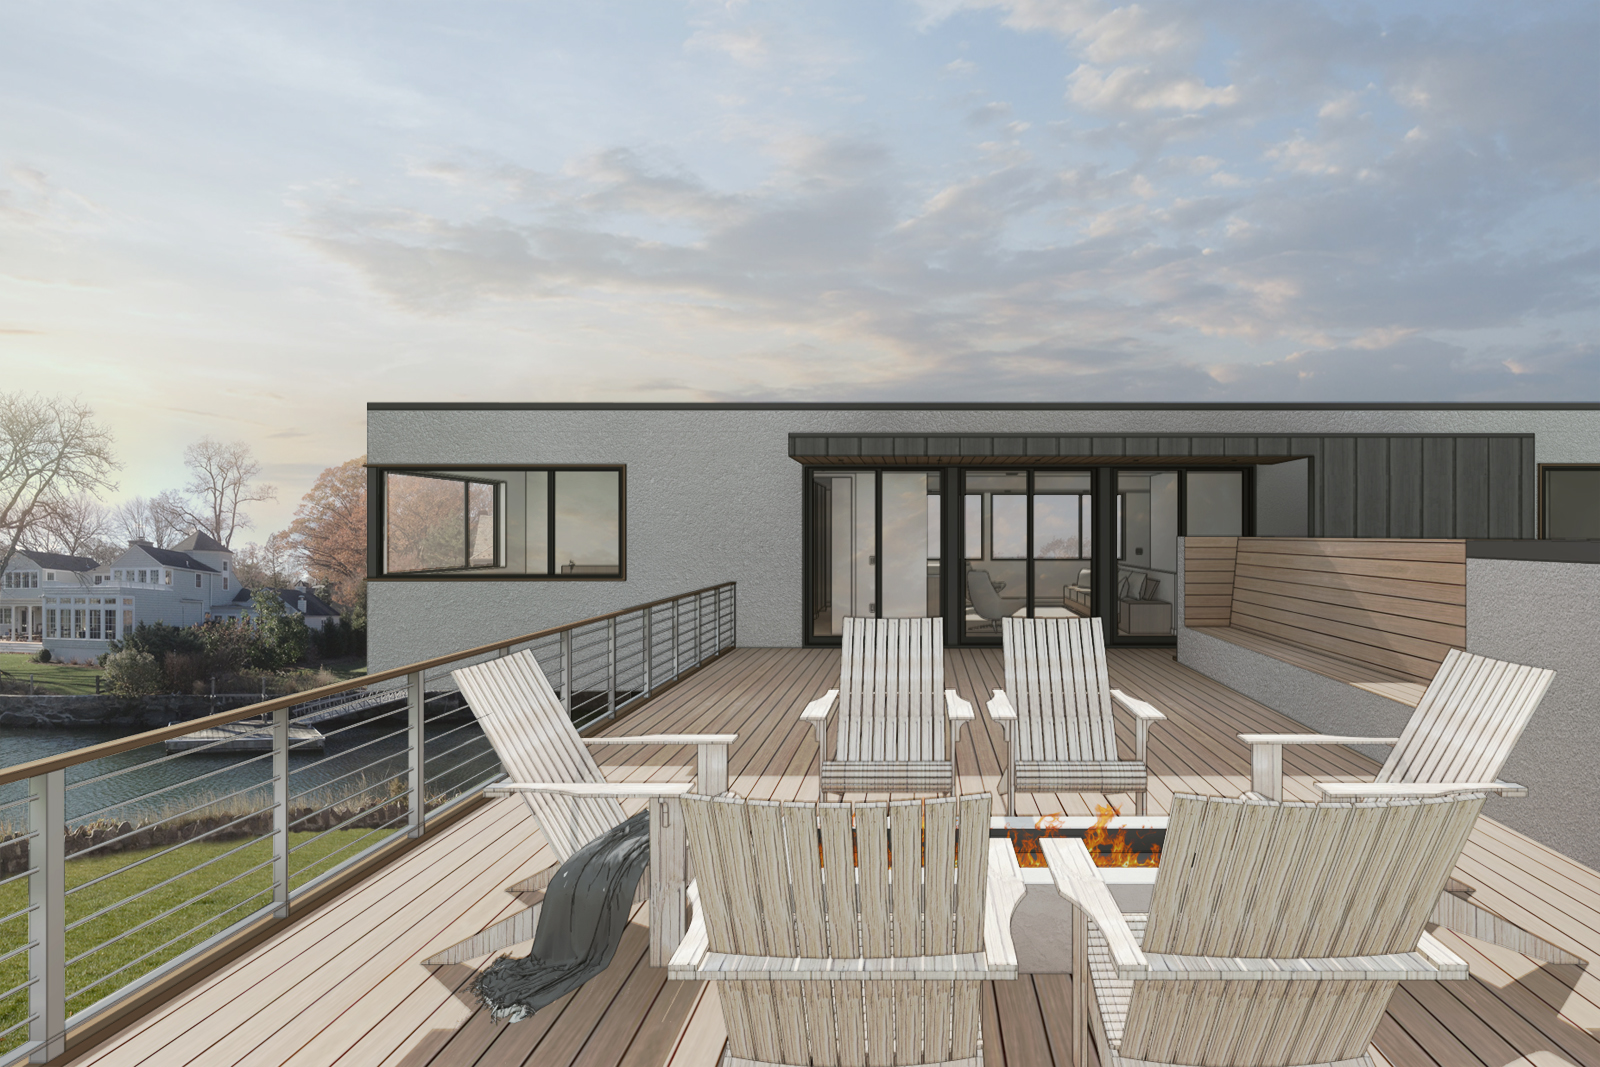 03-res4-resolution-4-architecture-modern-modular-prefab-douglas-lane-house-exterior-rooftop-fireplace-rendering.jpg